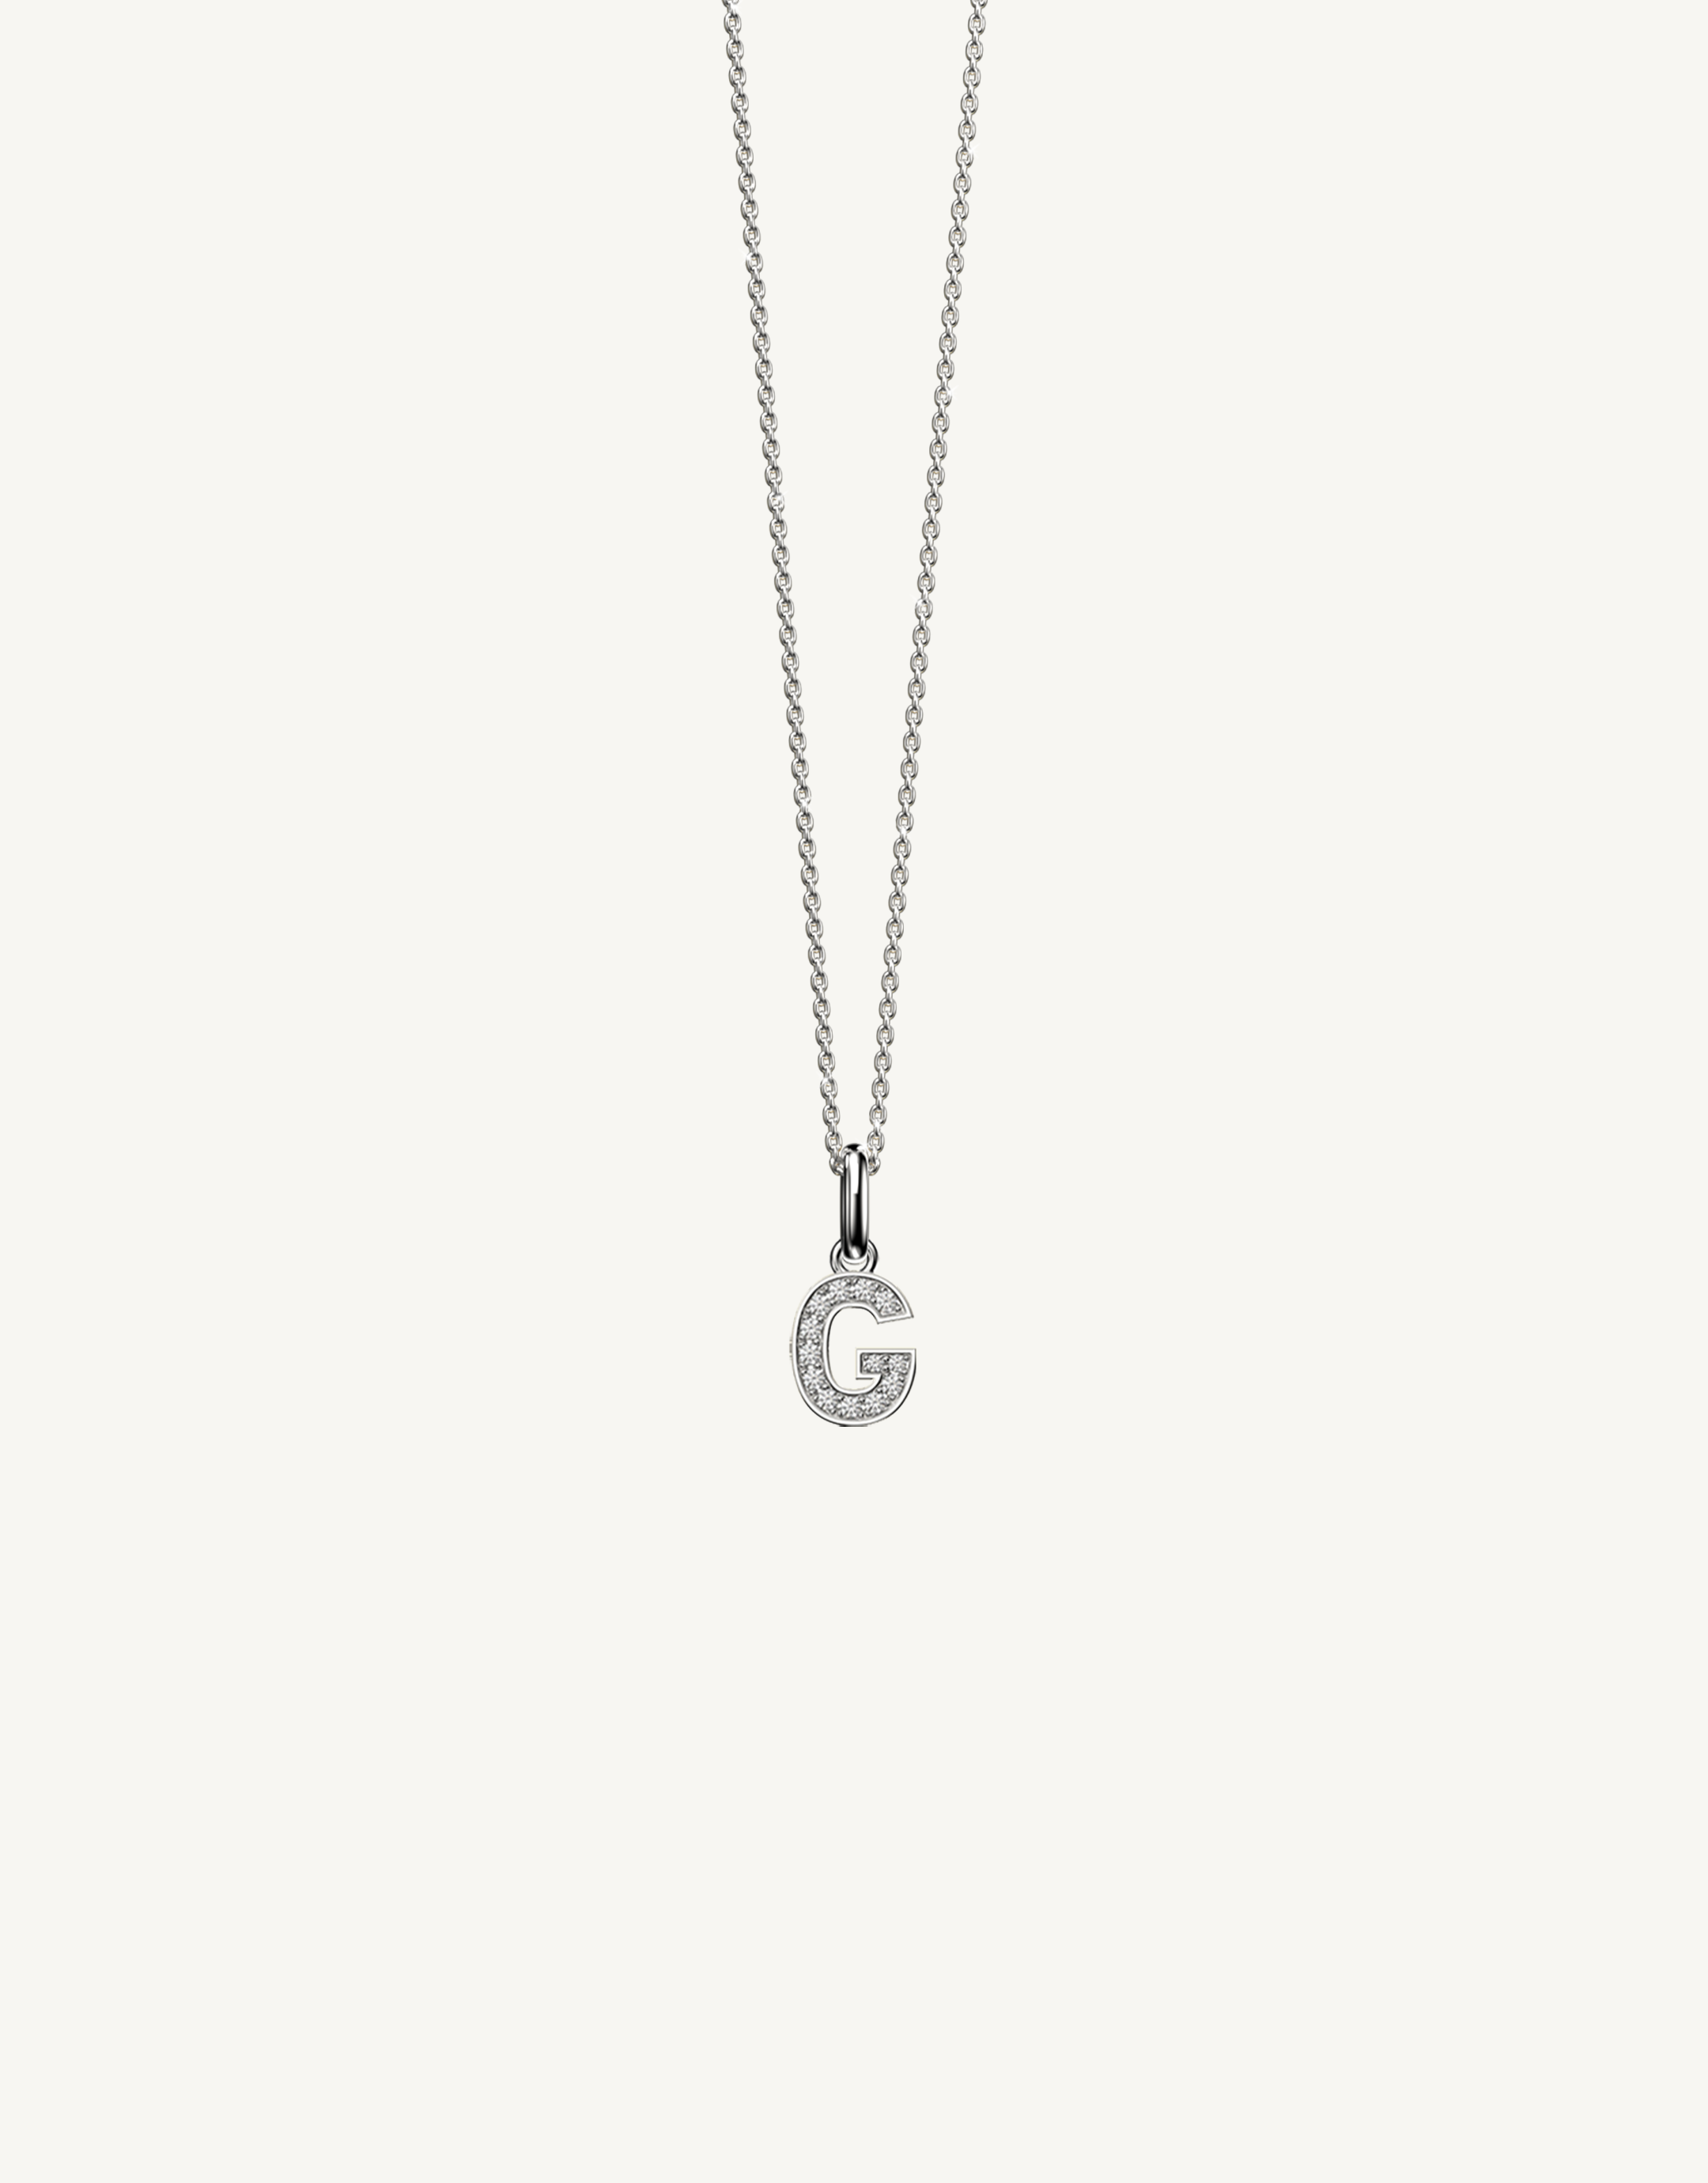 18k white gold diamond initial pendant. Luxury custom design. Initial G.